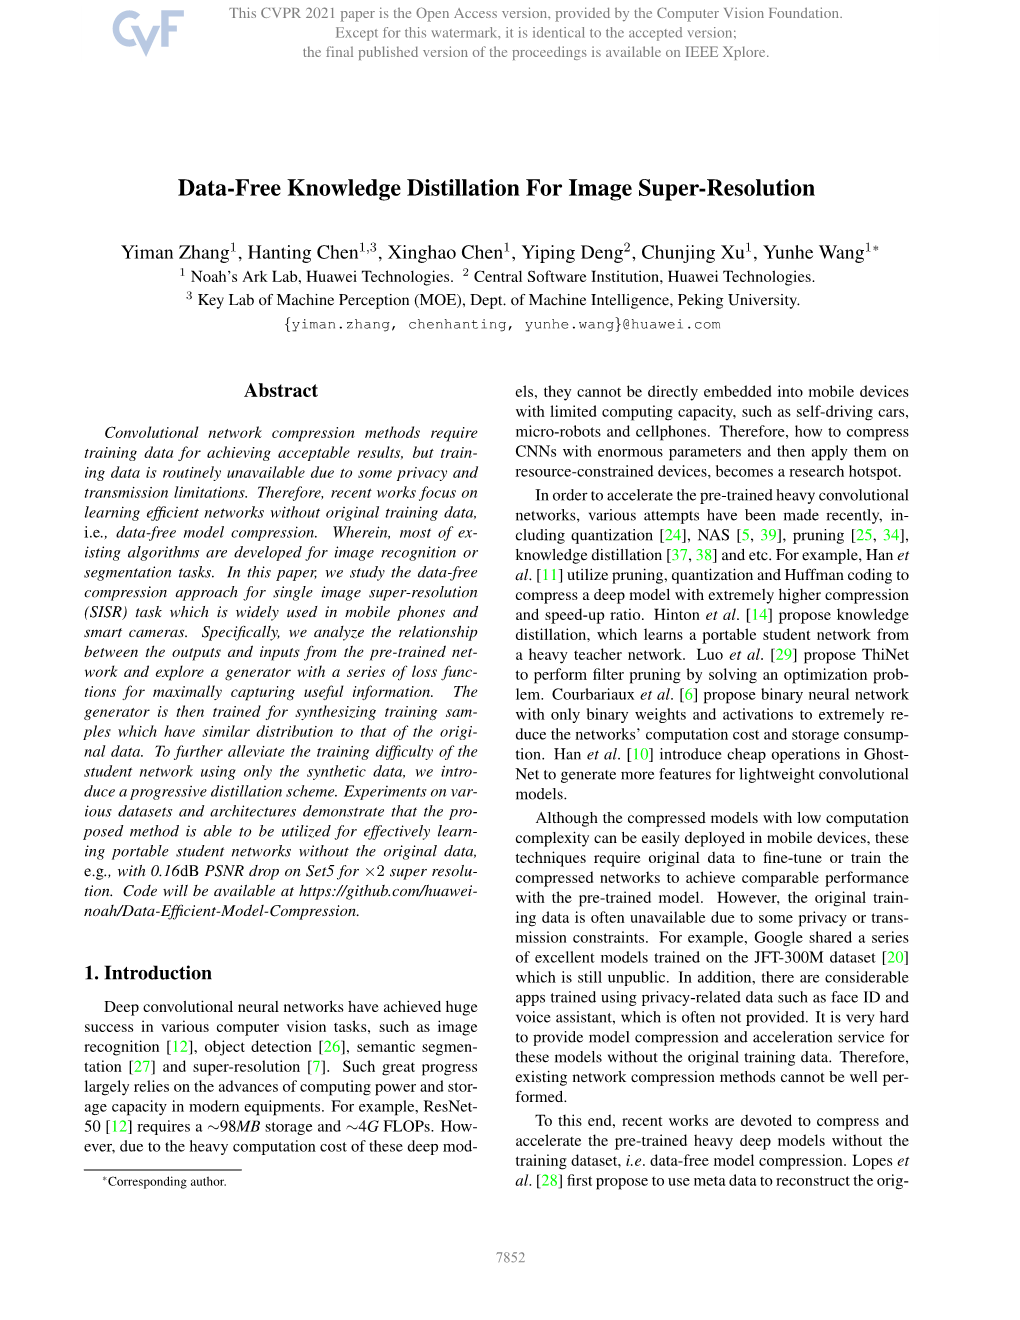 Data-Free Knowledge Distillation for Image Super-Resolution